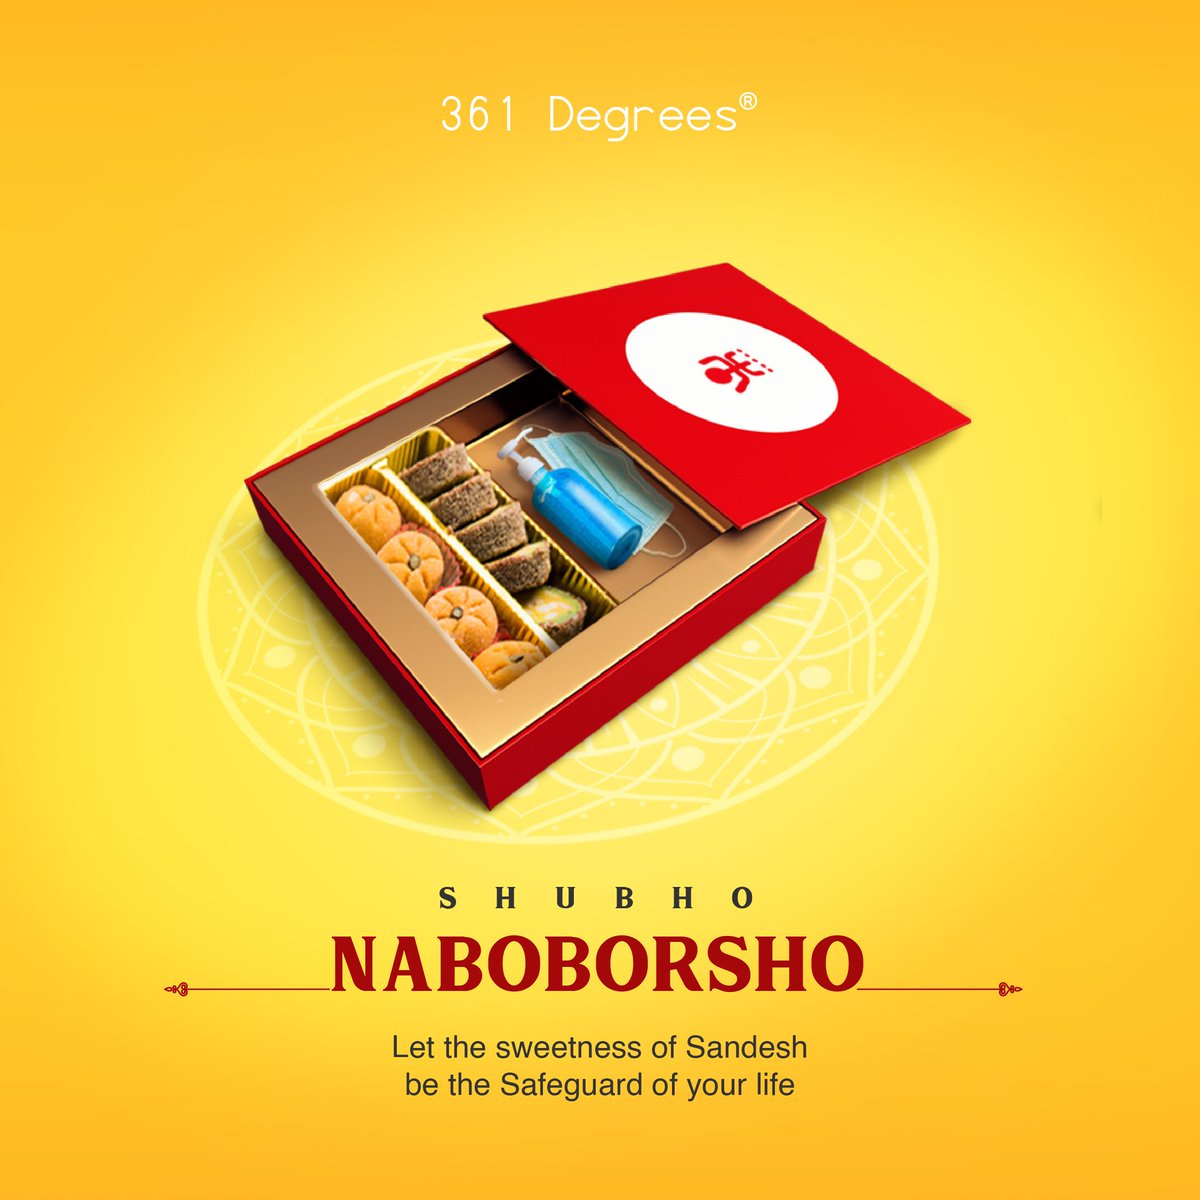 Let the new year fill you with a new taste of life, one that is safe and healthy.
Shubho Naboborsho!

#SubhoNoboBorsho #SubhoNababarsha #PoilaBaisakh #BengaliNewYear #361Degrees #Kolkata #StaySafe